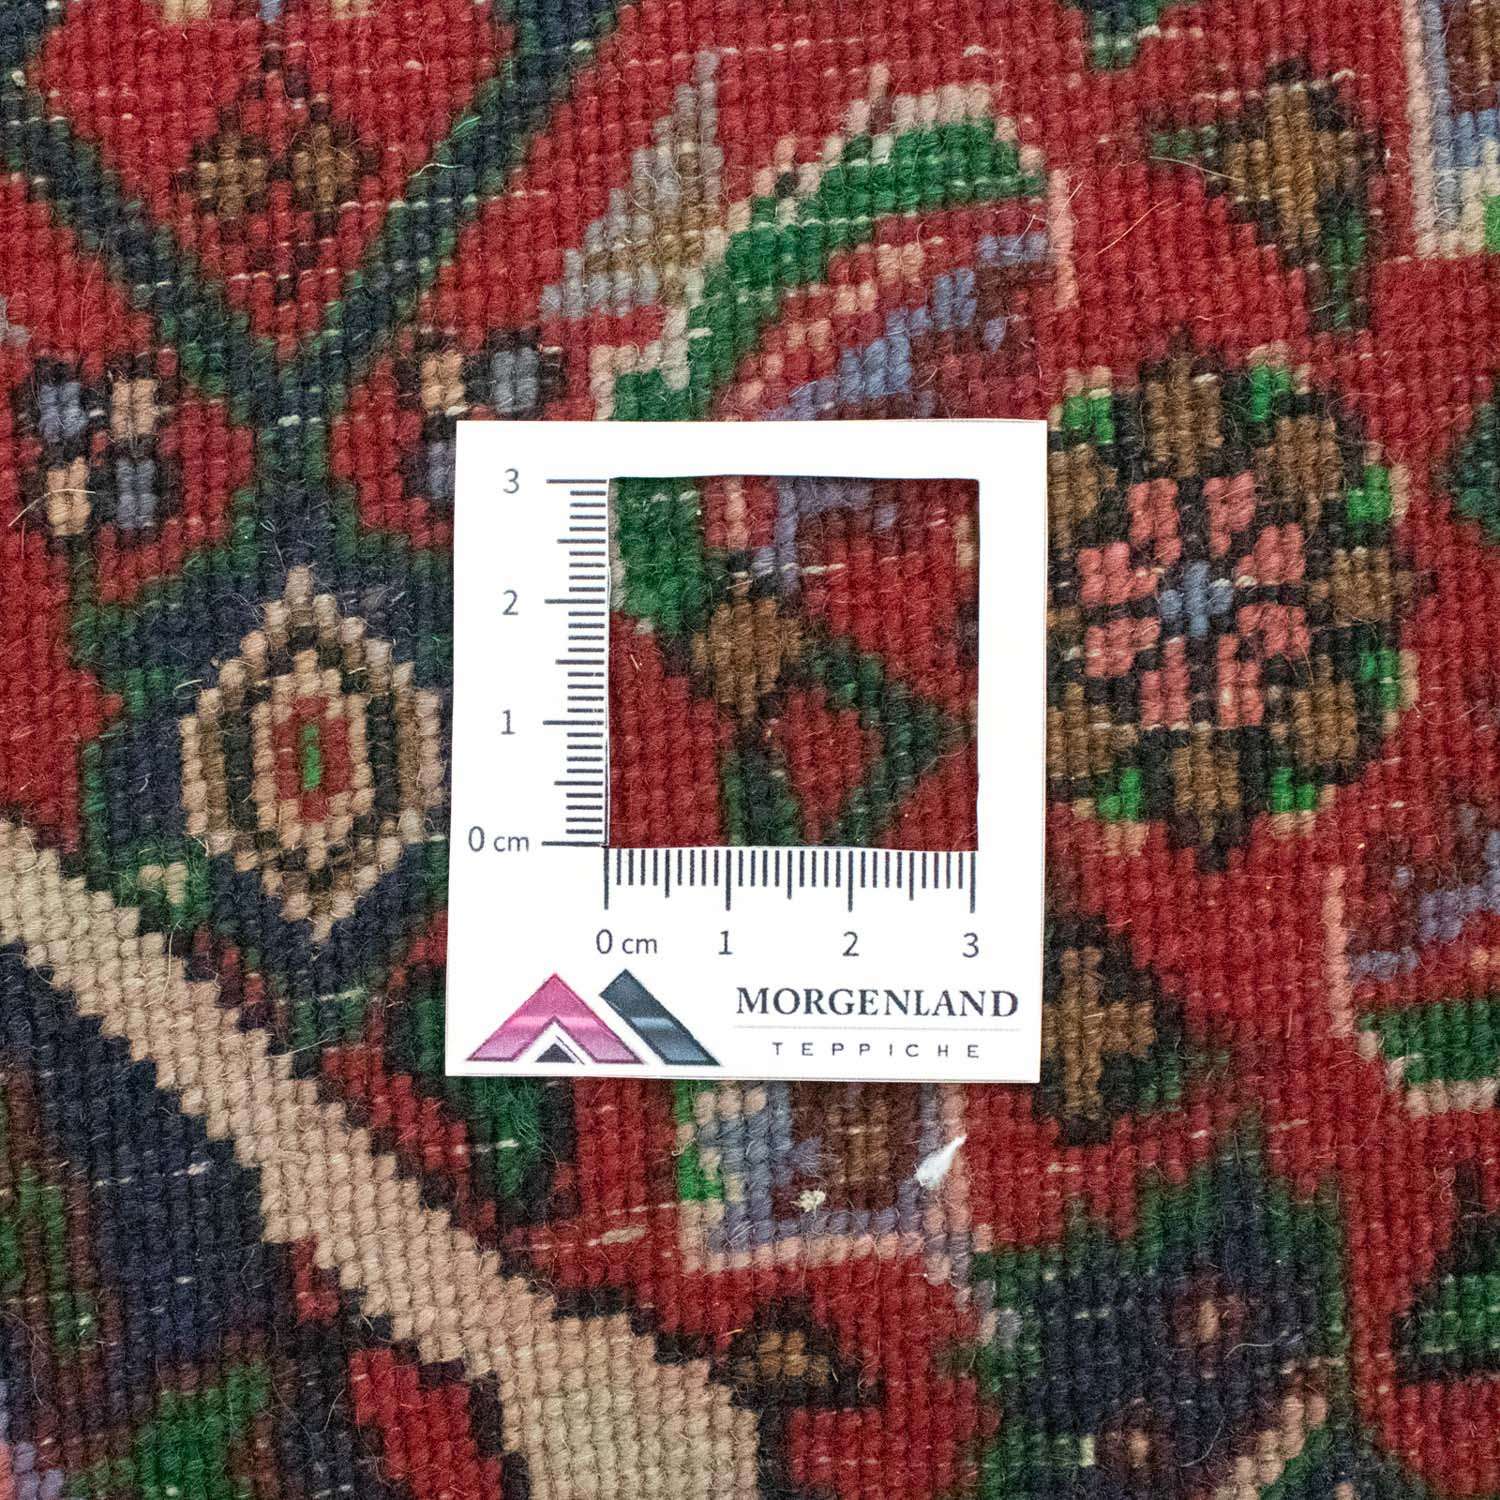 Loper Perzisch Tapijt - Nomadisch - 372 x 95 cm - rood